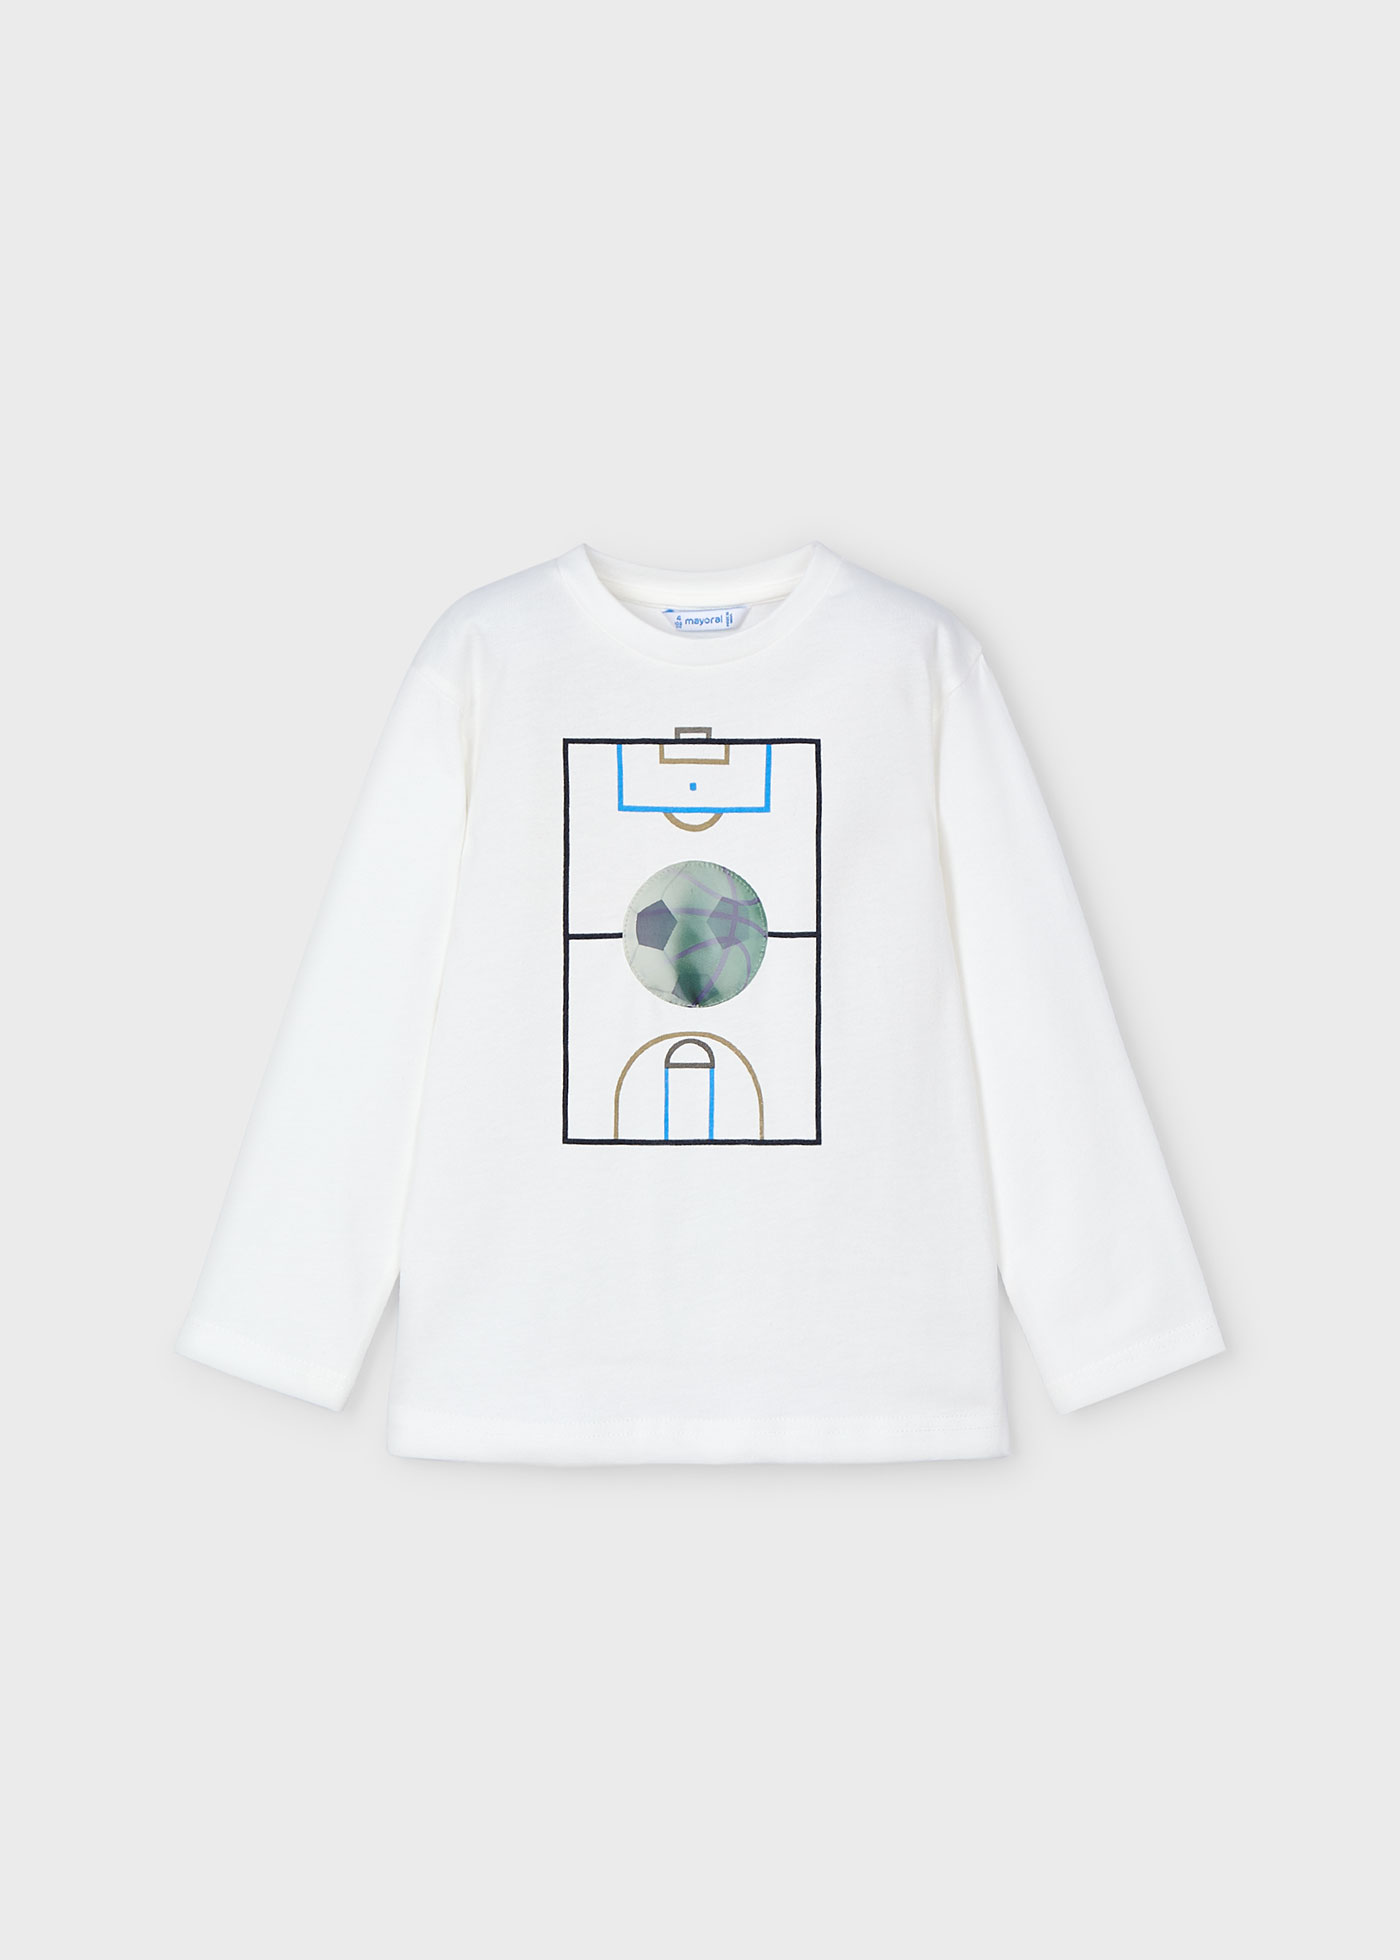 Lenticular ball t-shirt for boys